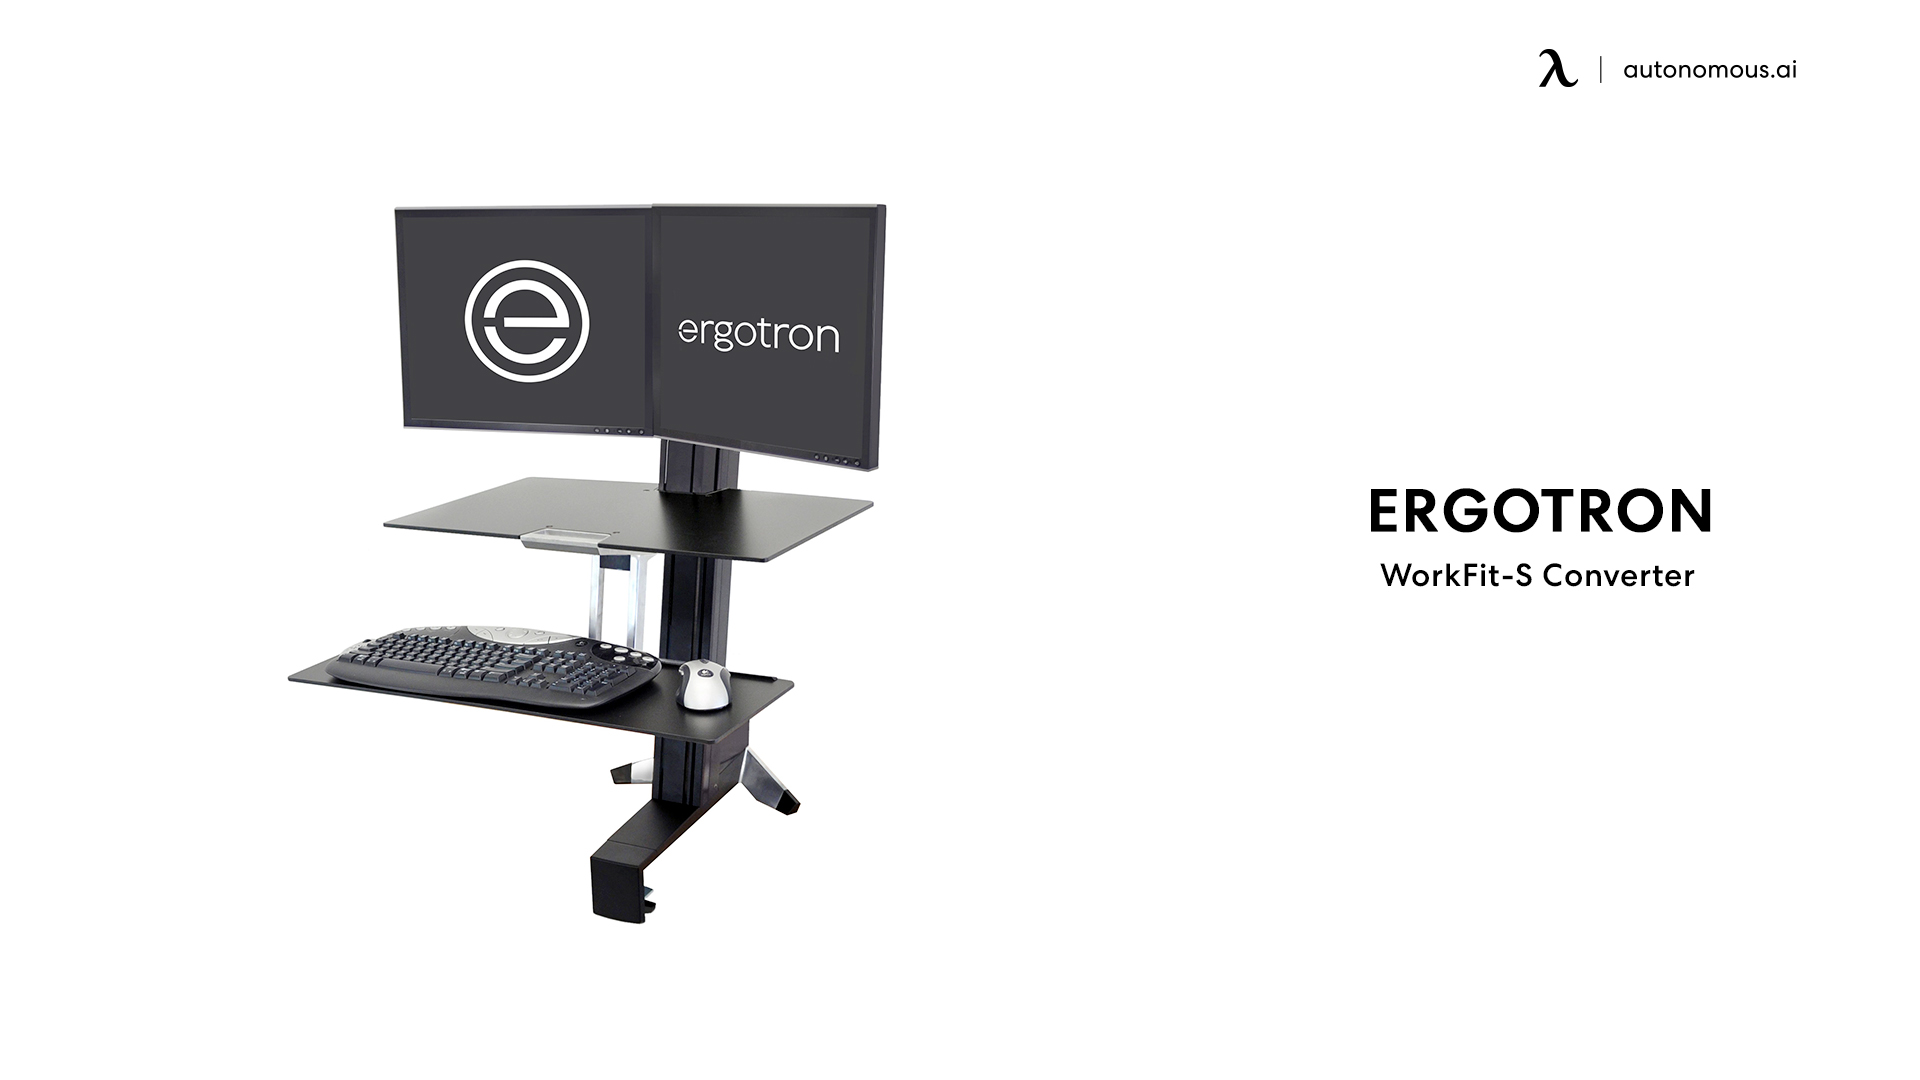 WorkFit-S desk monitor stand riser from Ergotron